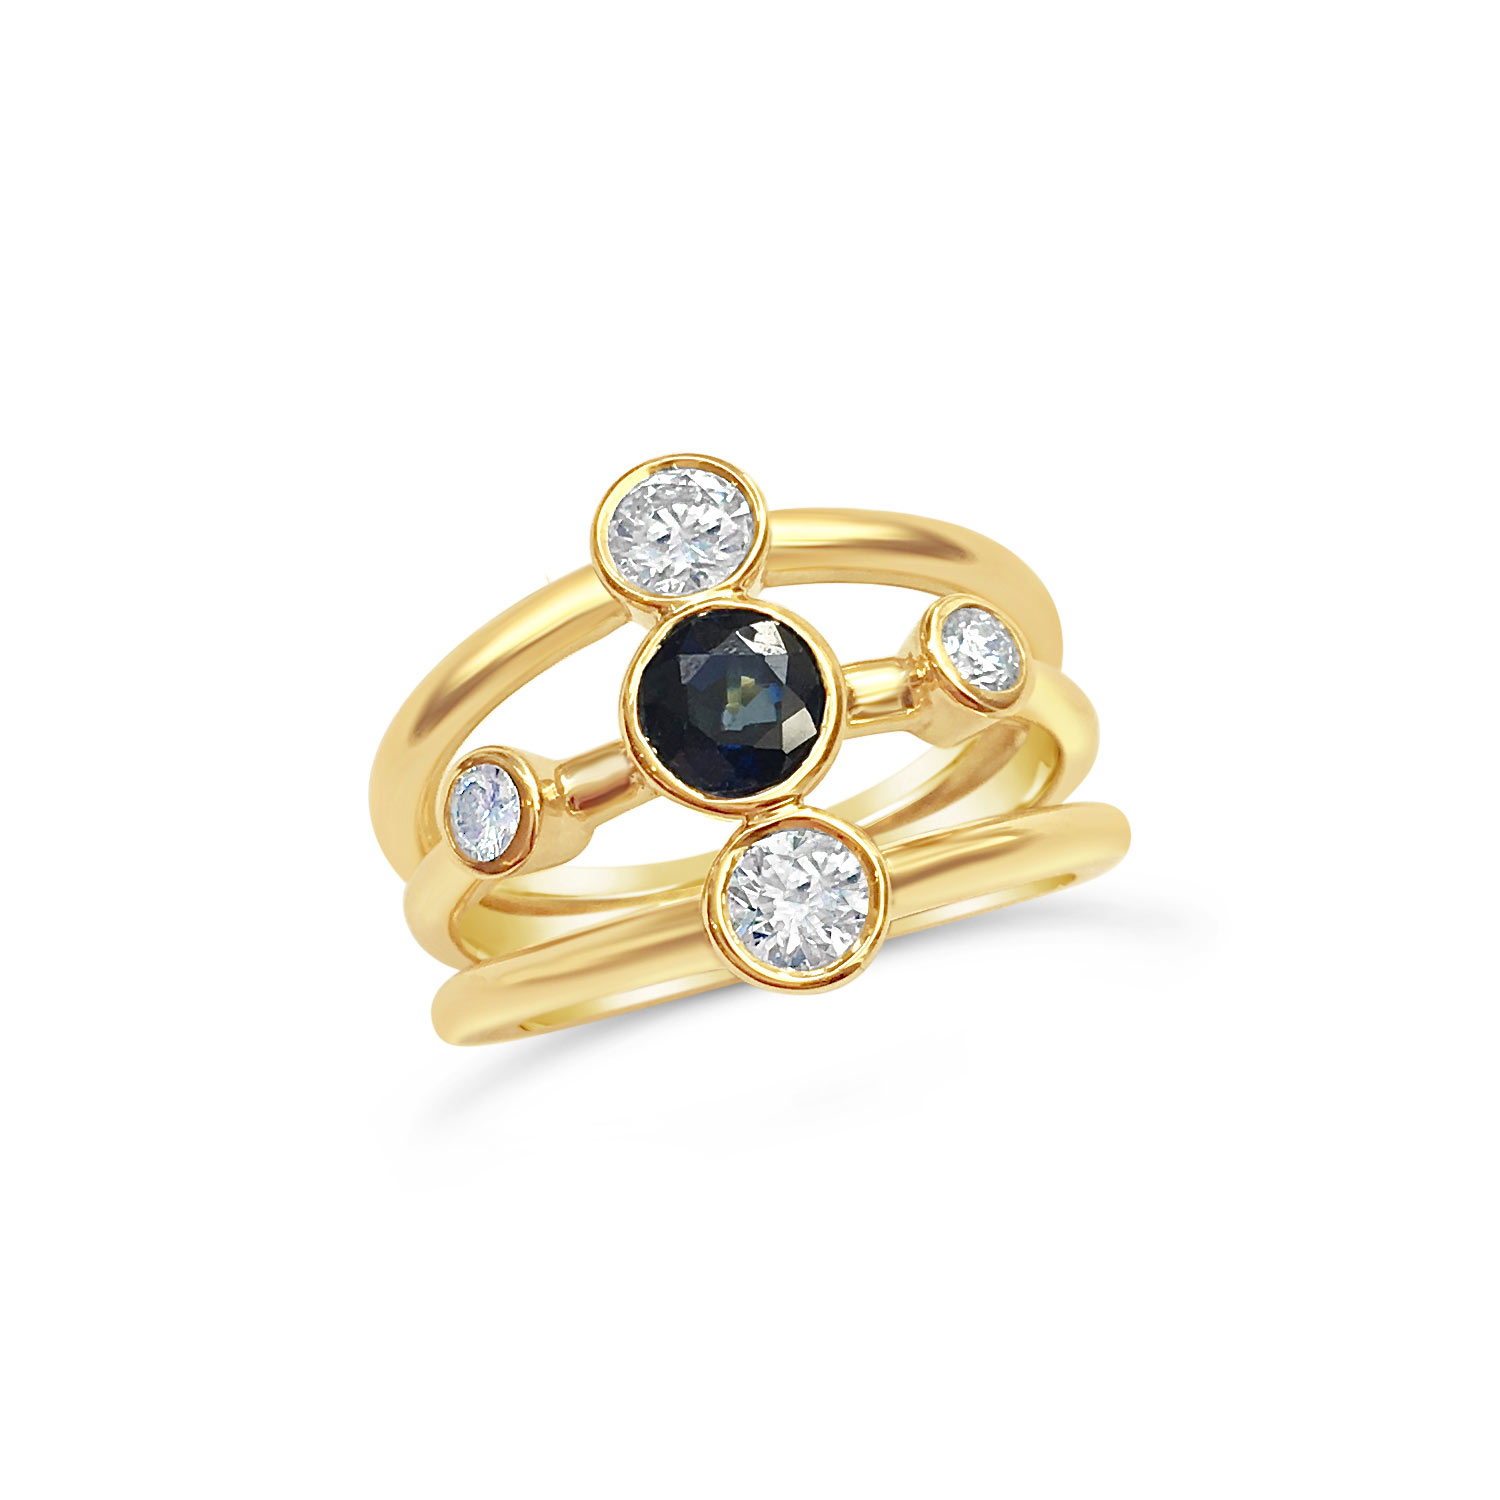 Bespoke sapphire and diamond rub over set five stone ring